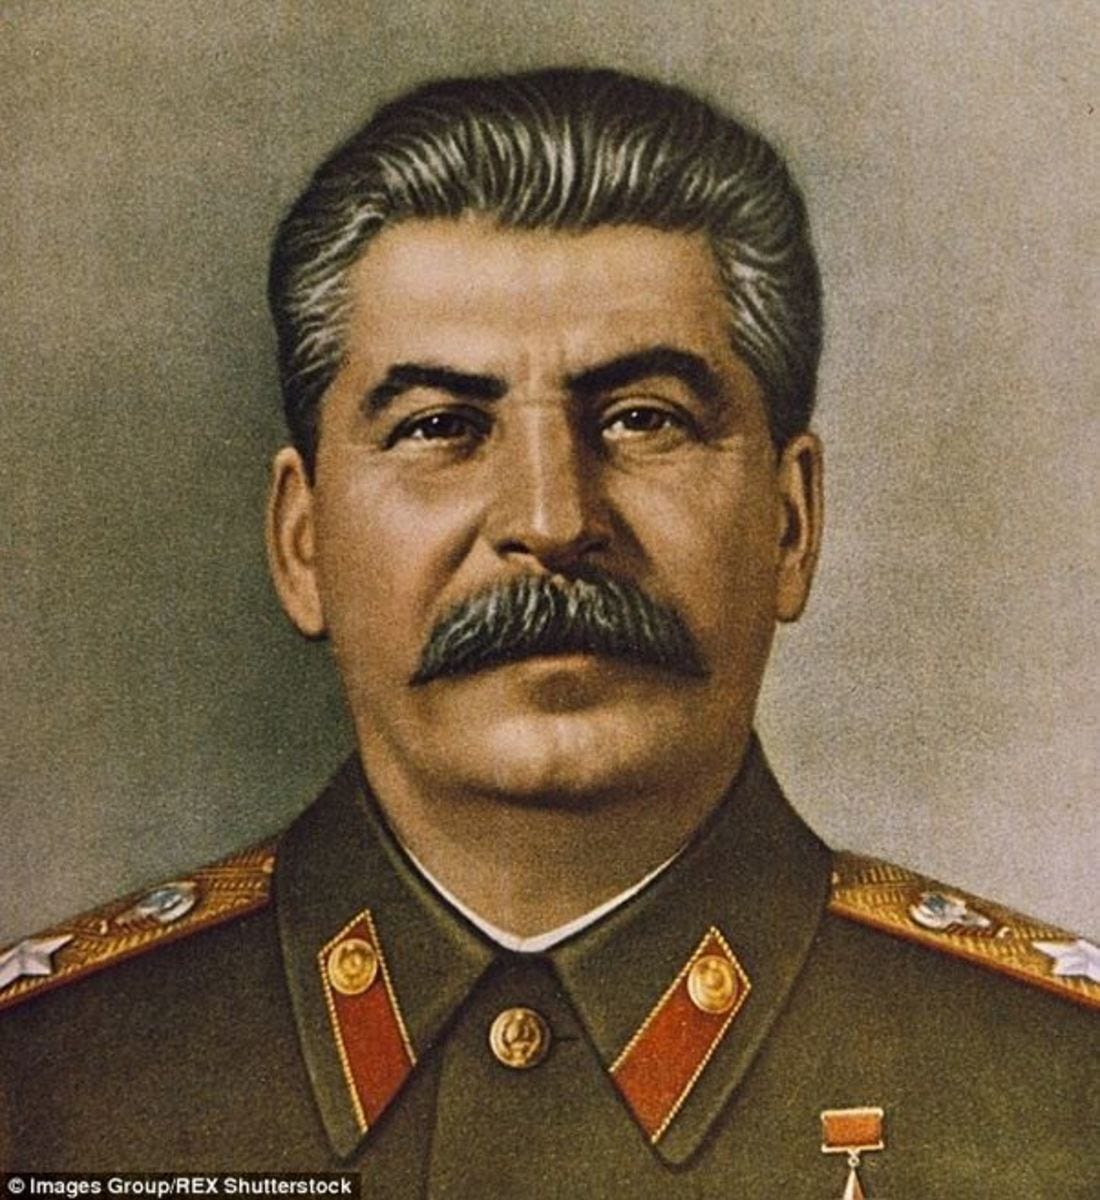 Joseph Stalin: Quick Facts | Owlcation